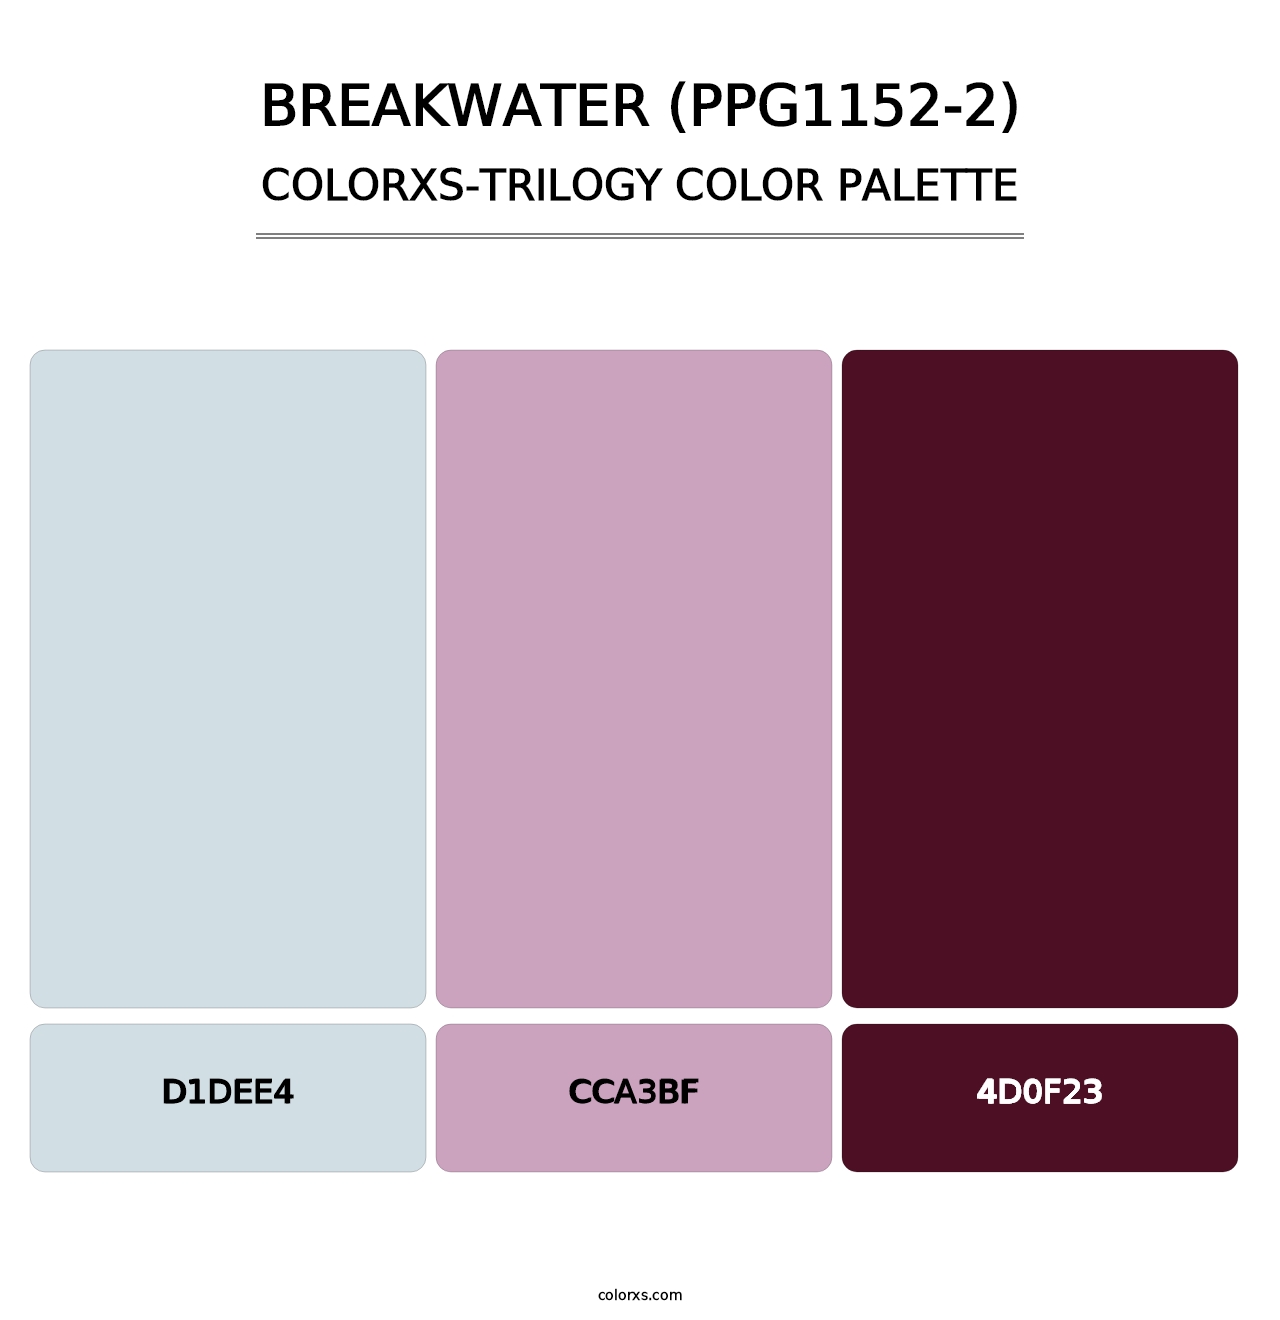 Breakwater (PPG1152-2) - Colorxs Trilogy Palette